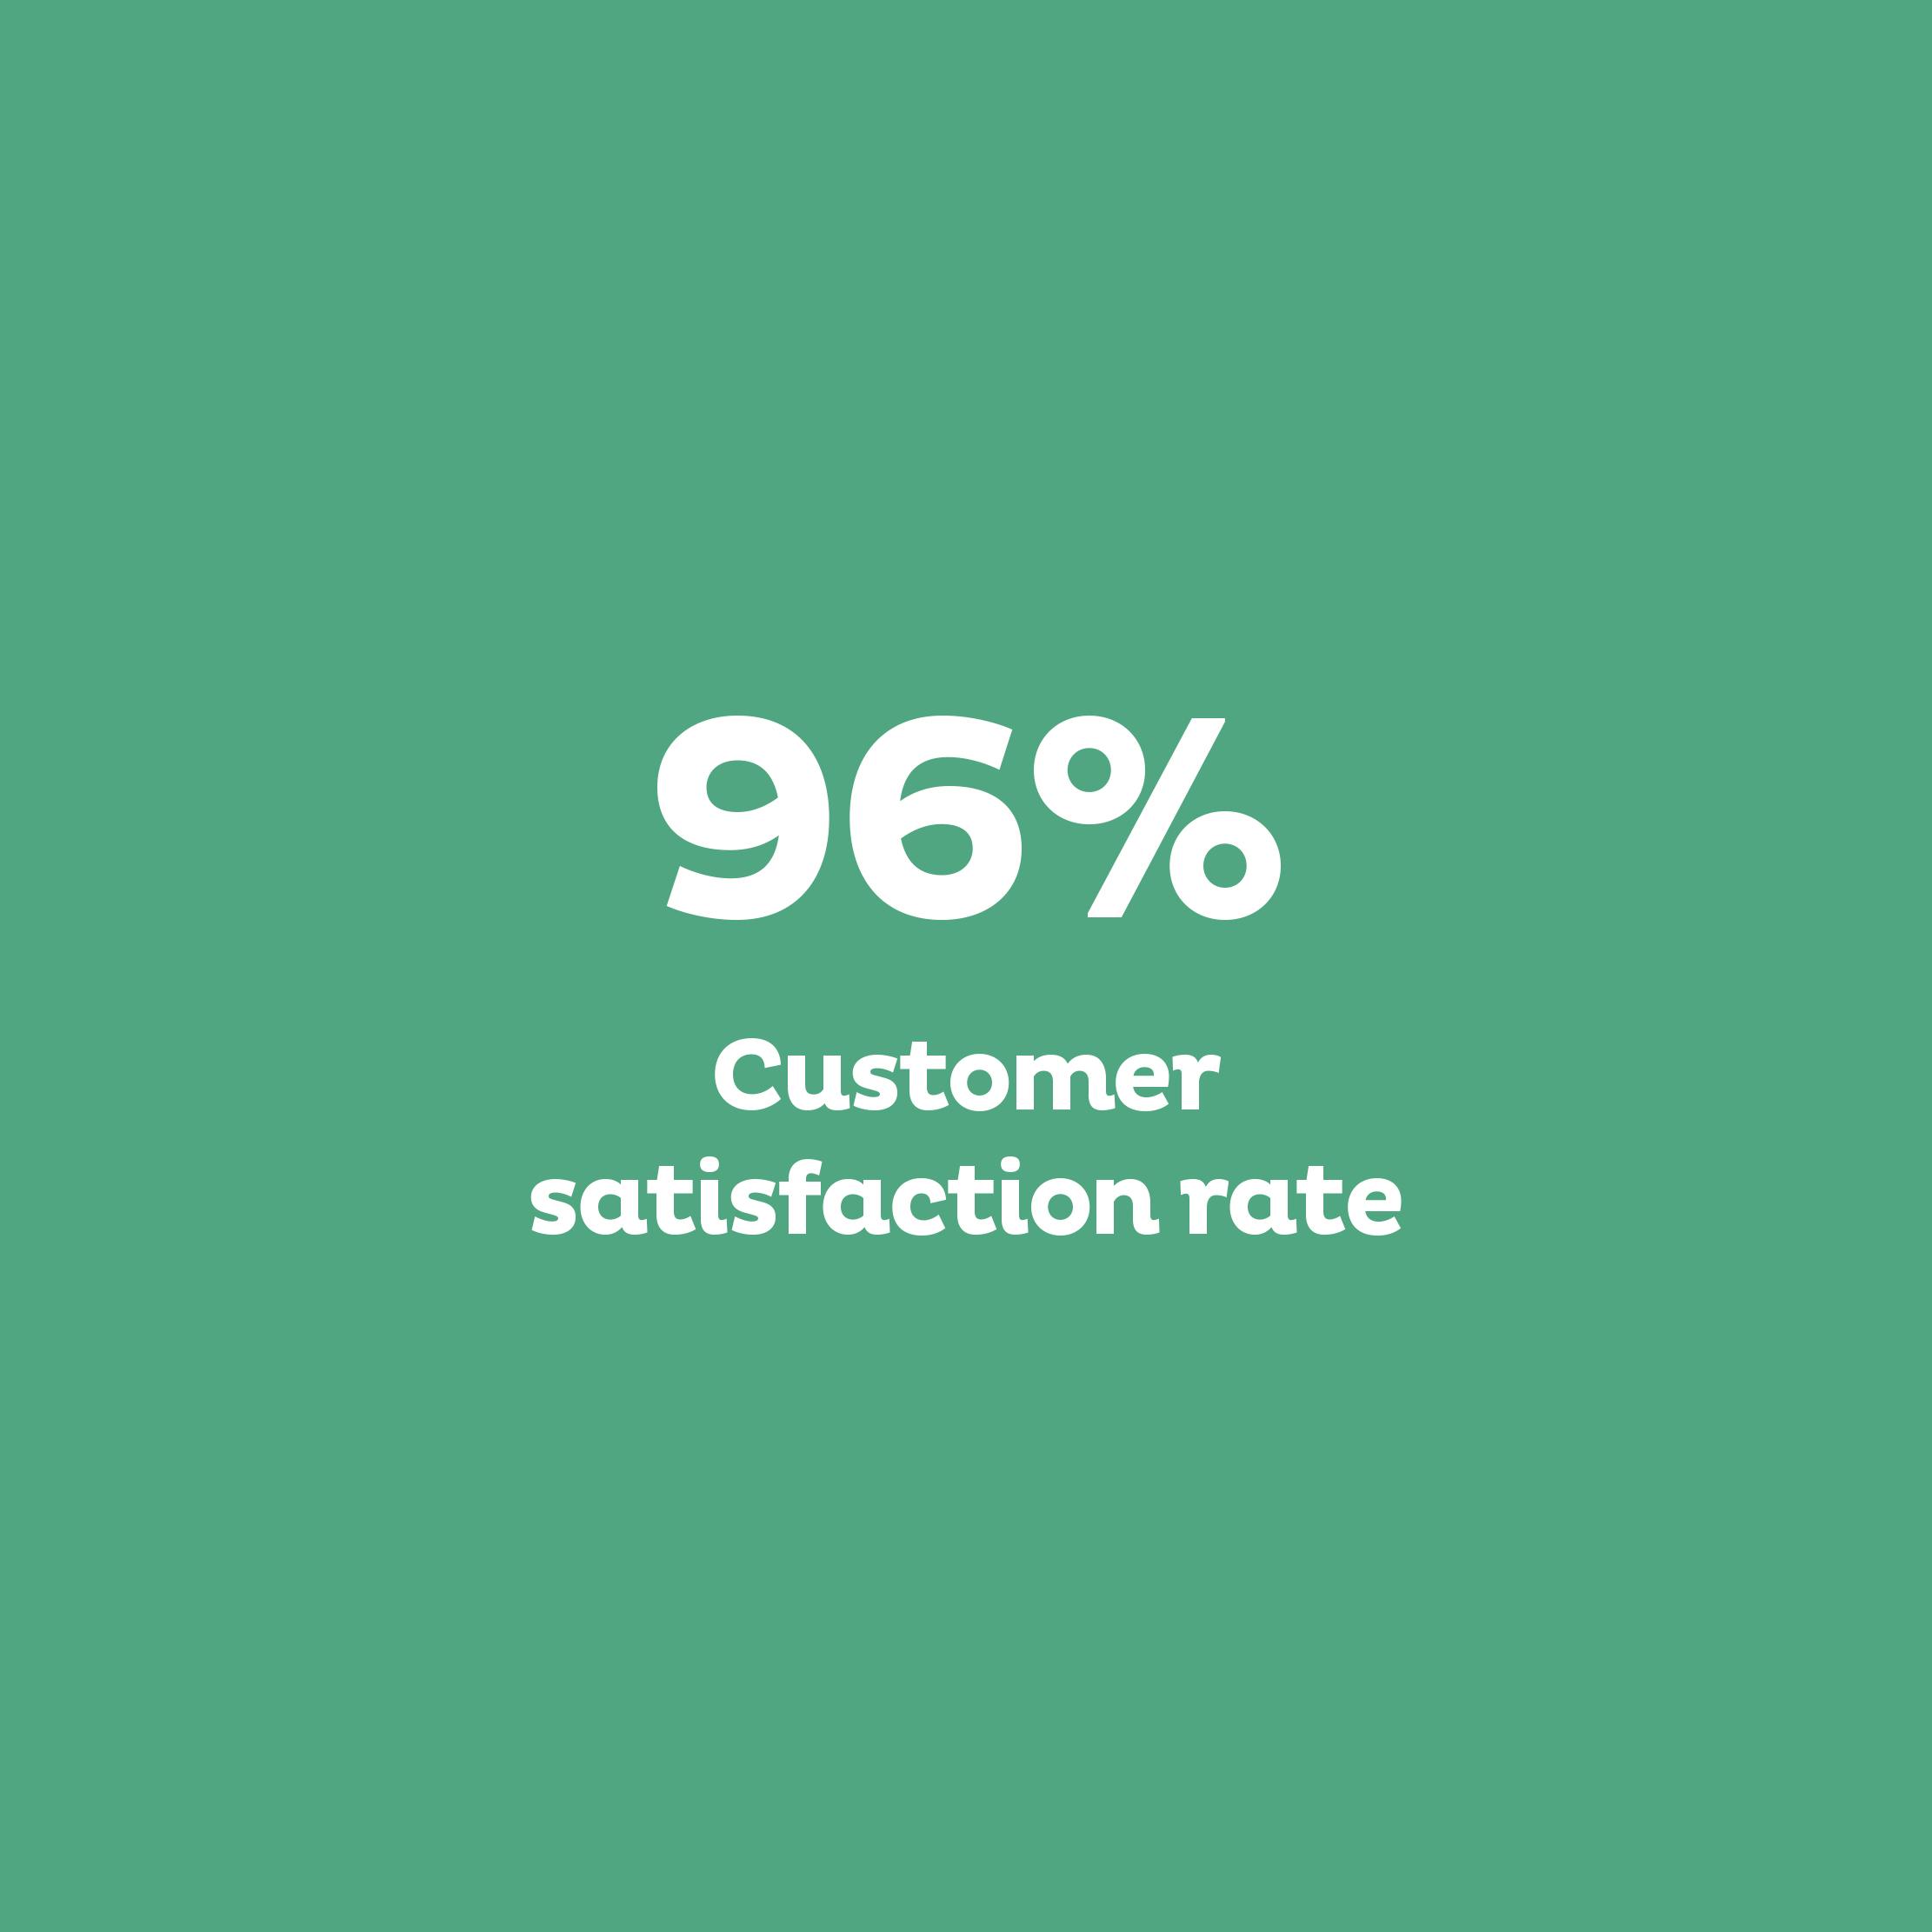 96% Customer satisfaction rate